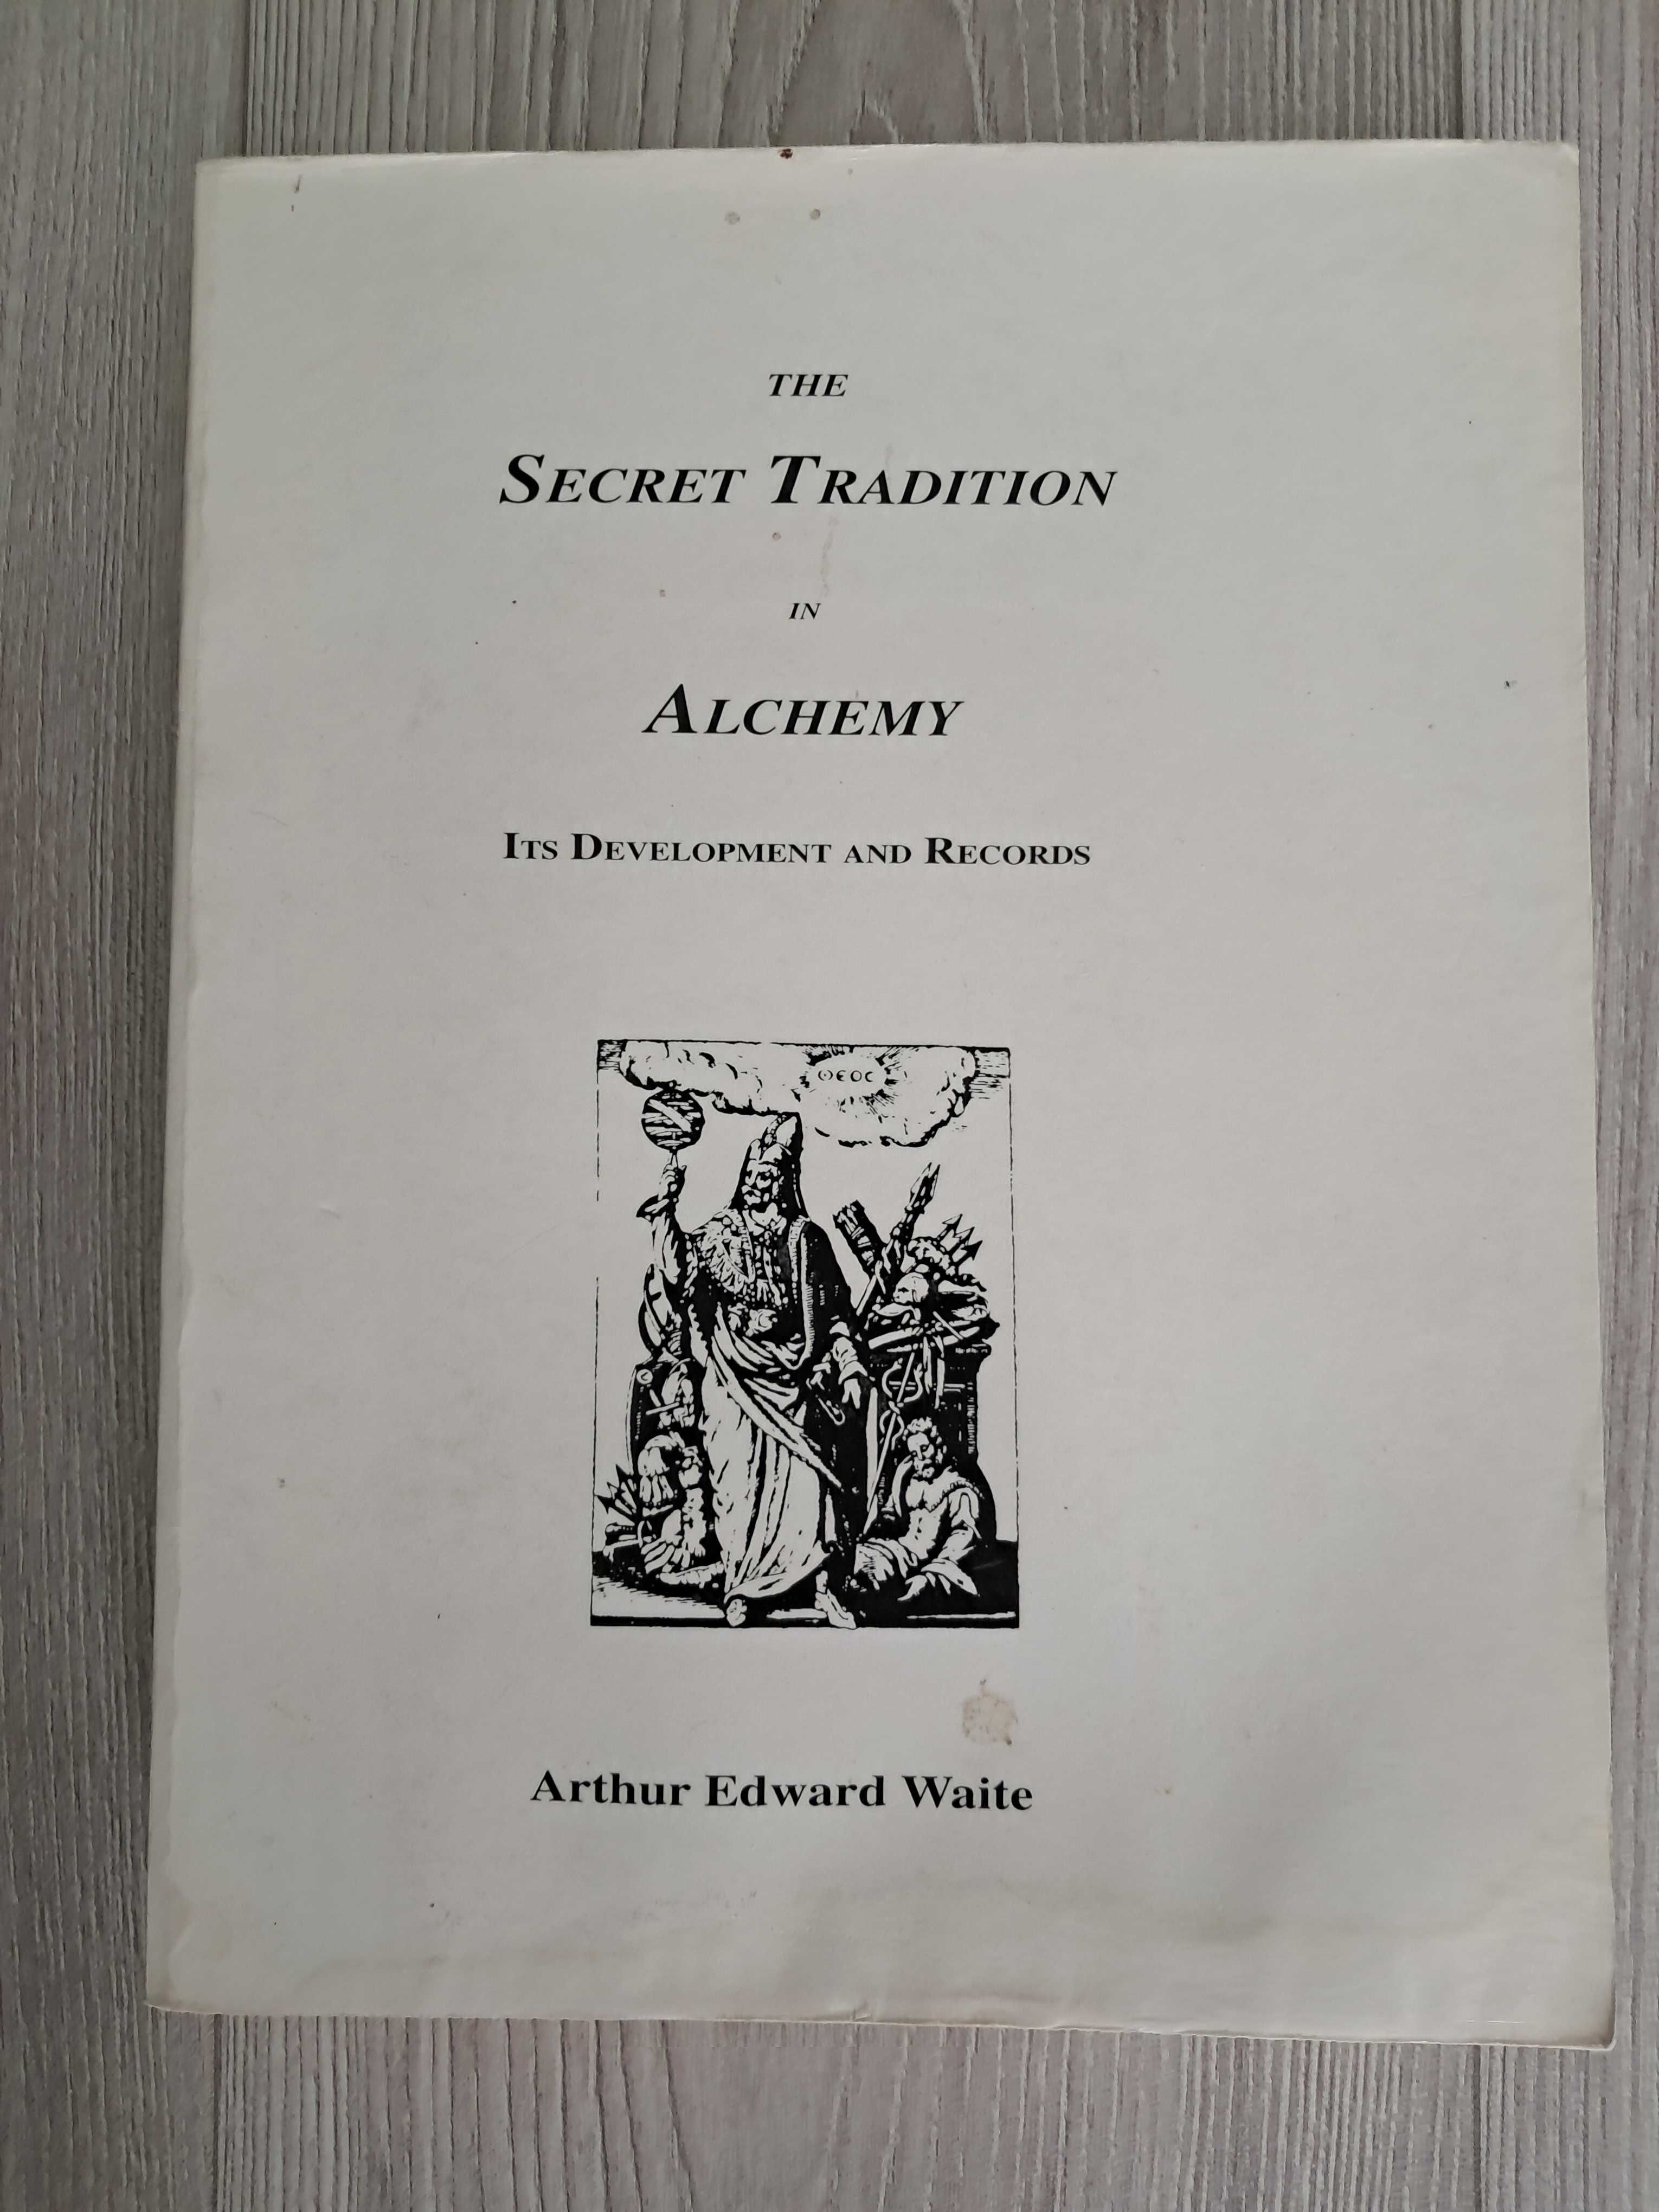 The Secret Tradition in Alchemy - Arthur Edward Waite